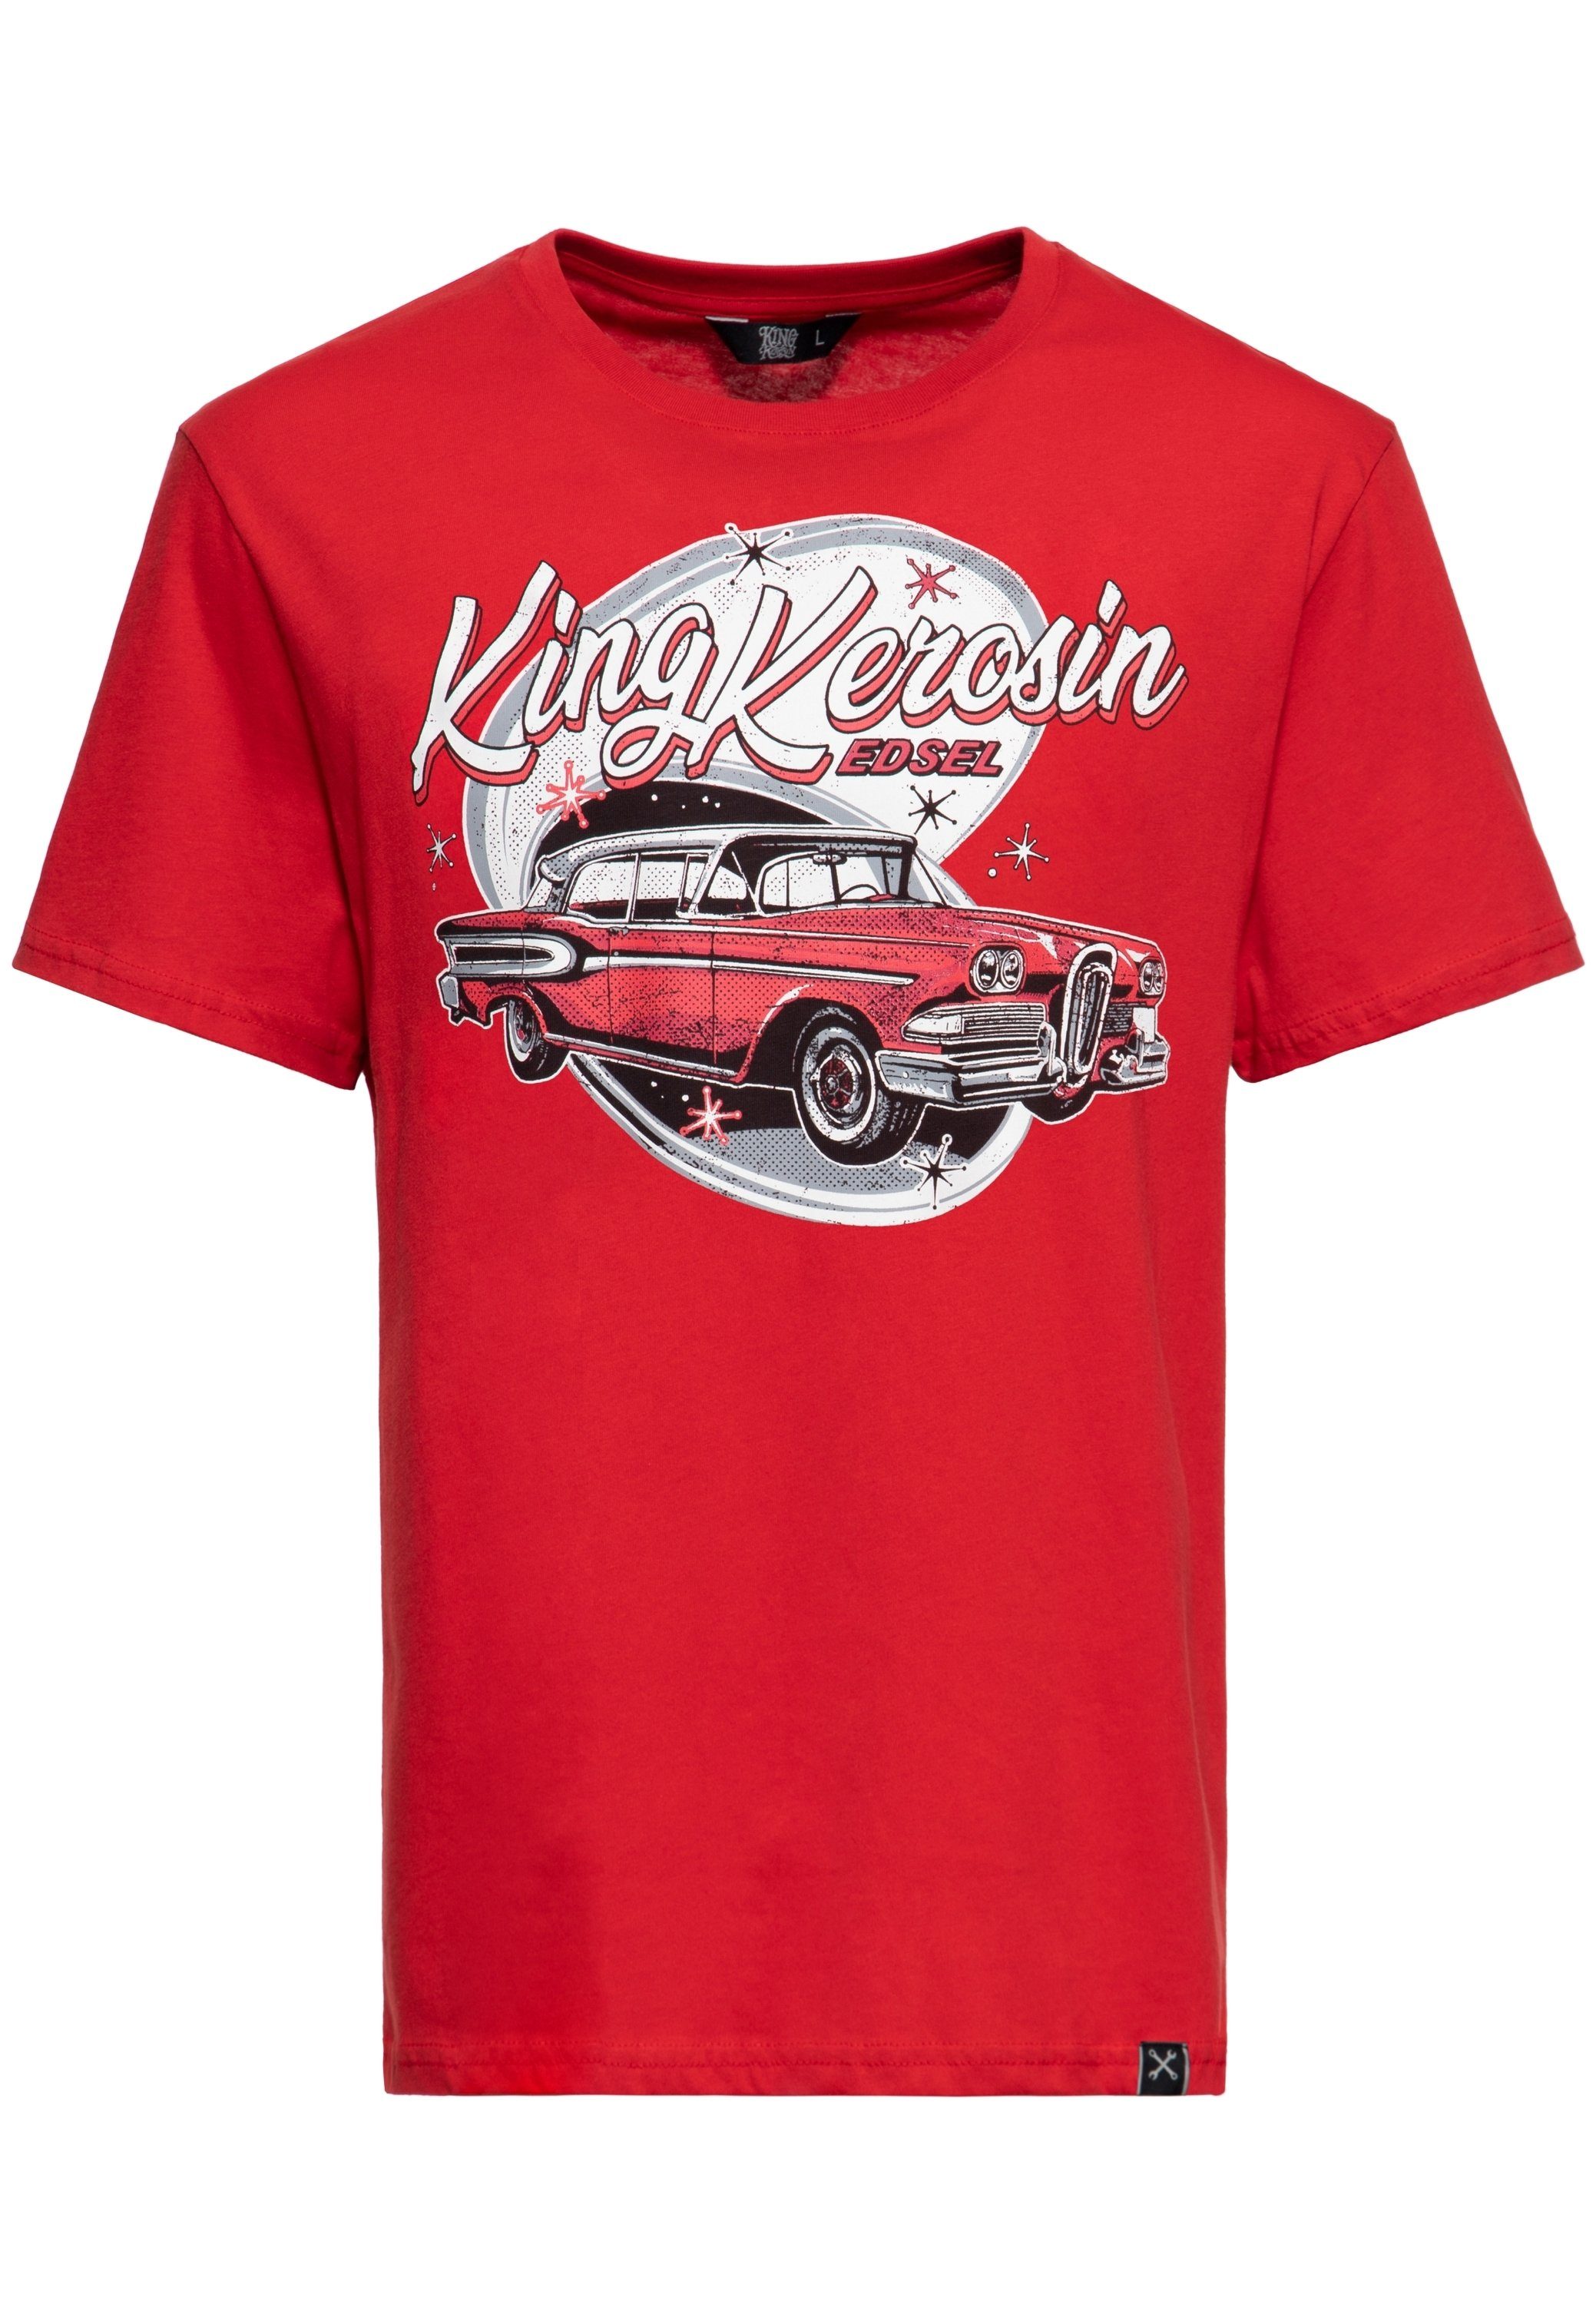 KingKerosin Print-Shirt Edsel mit Classic Car - Artwork rot